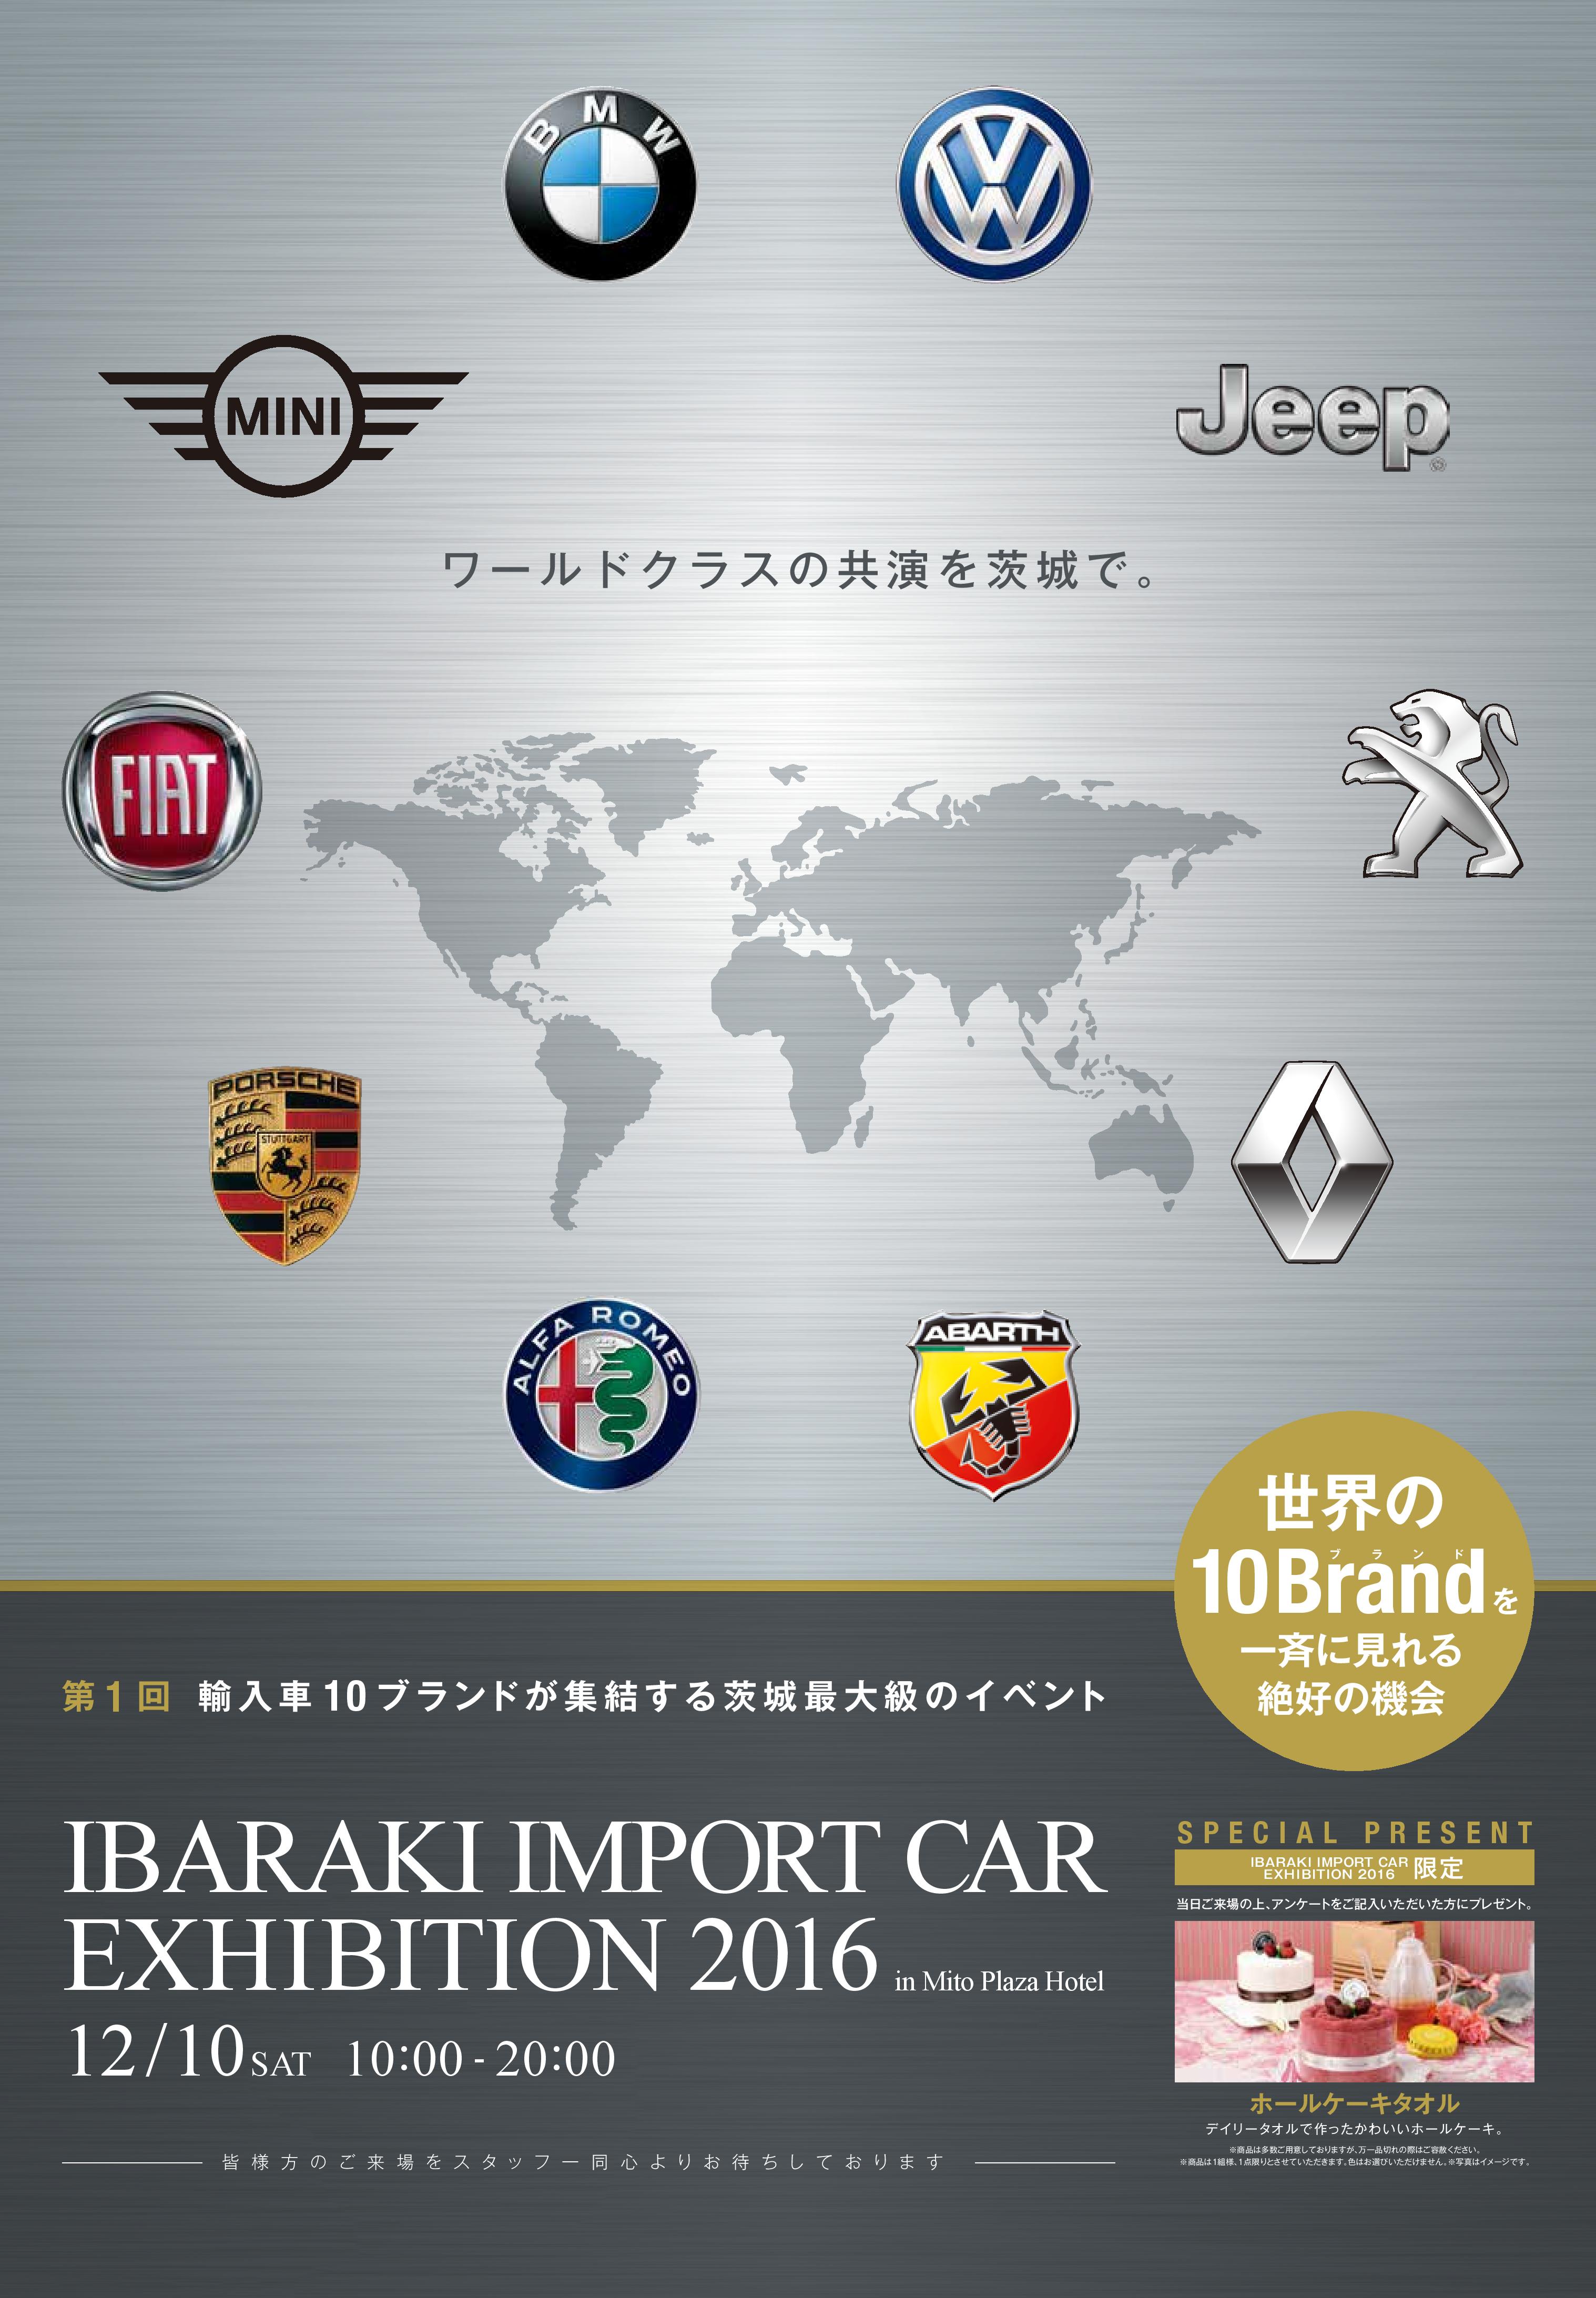 IBARAKI IMPORT CAR EXHIBITION